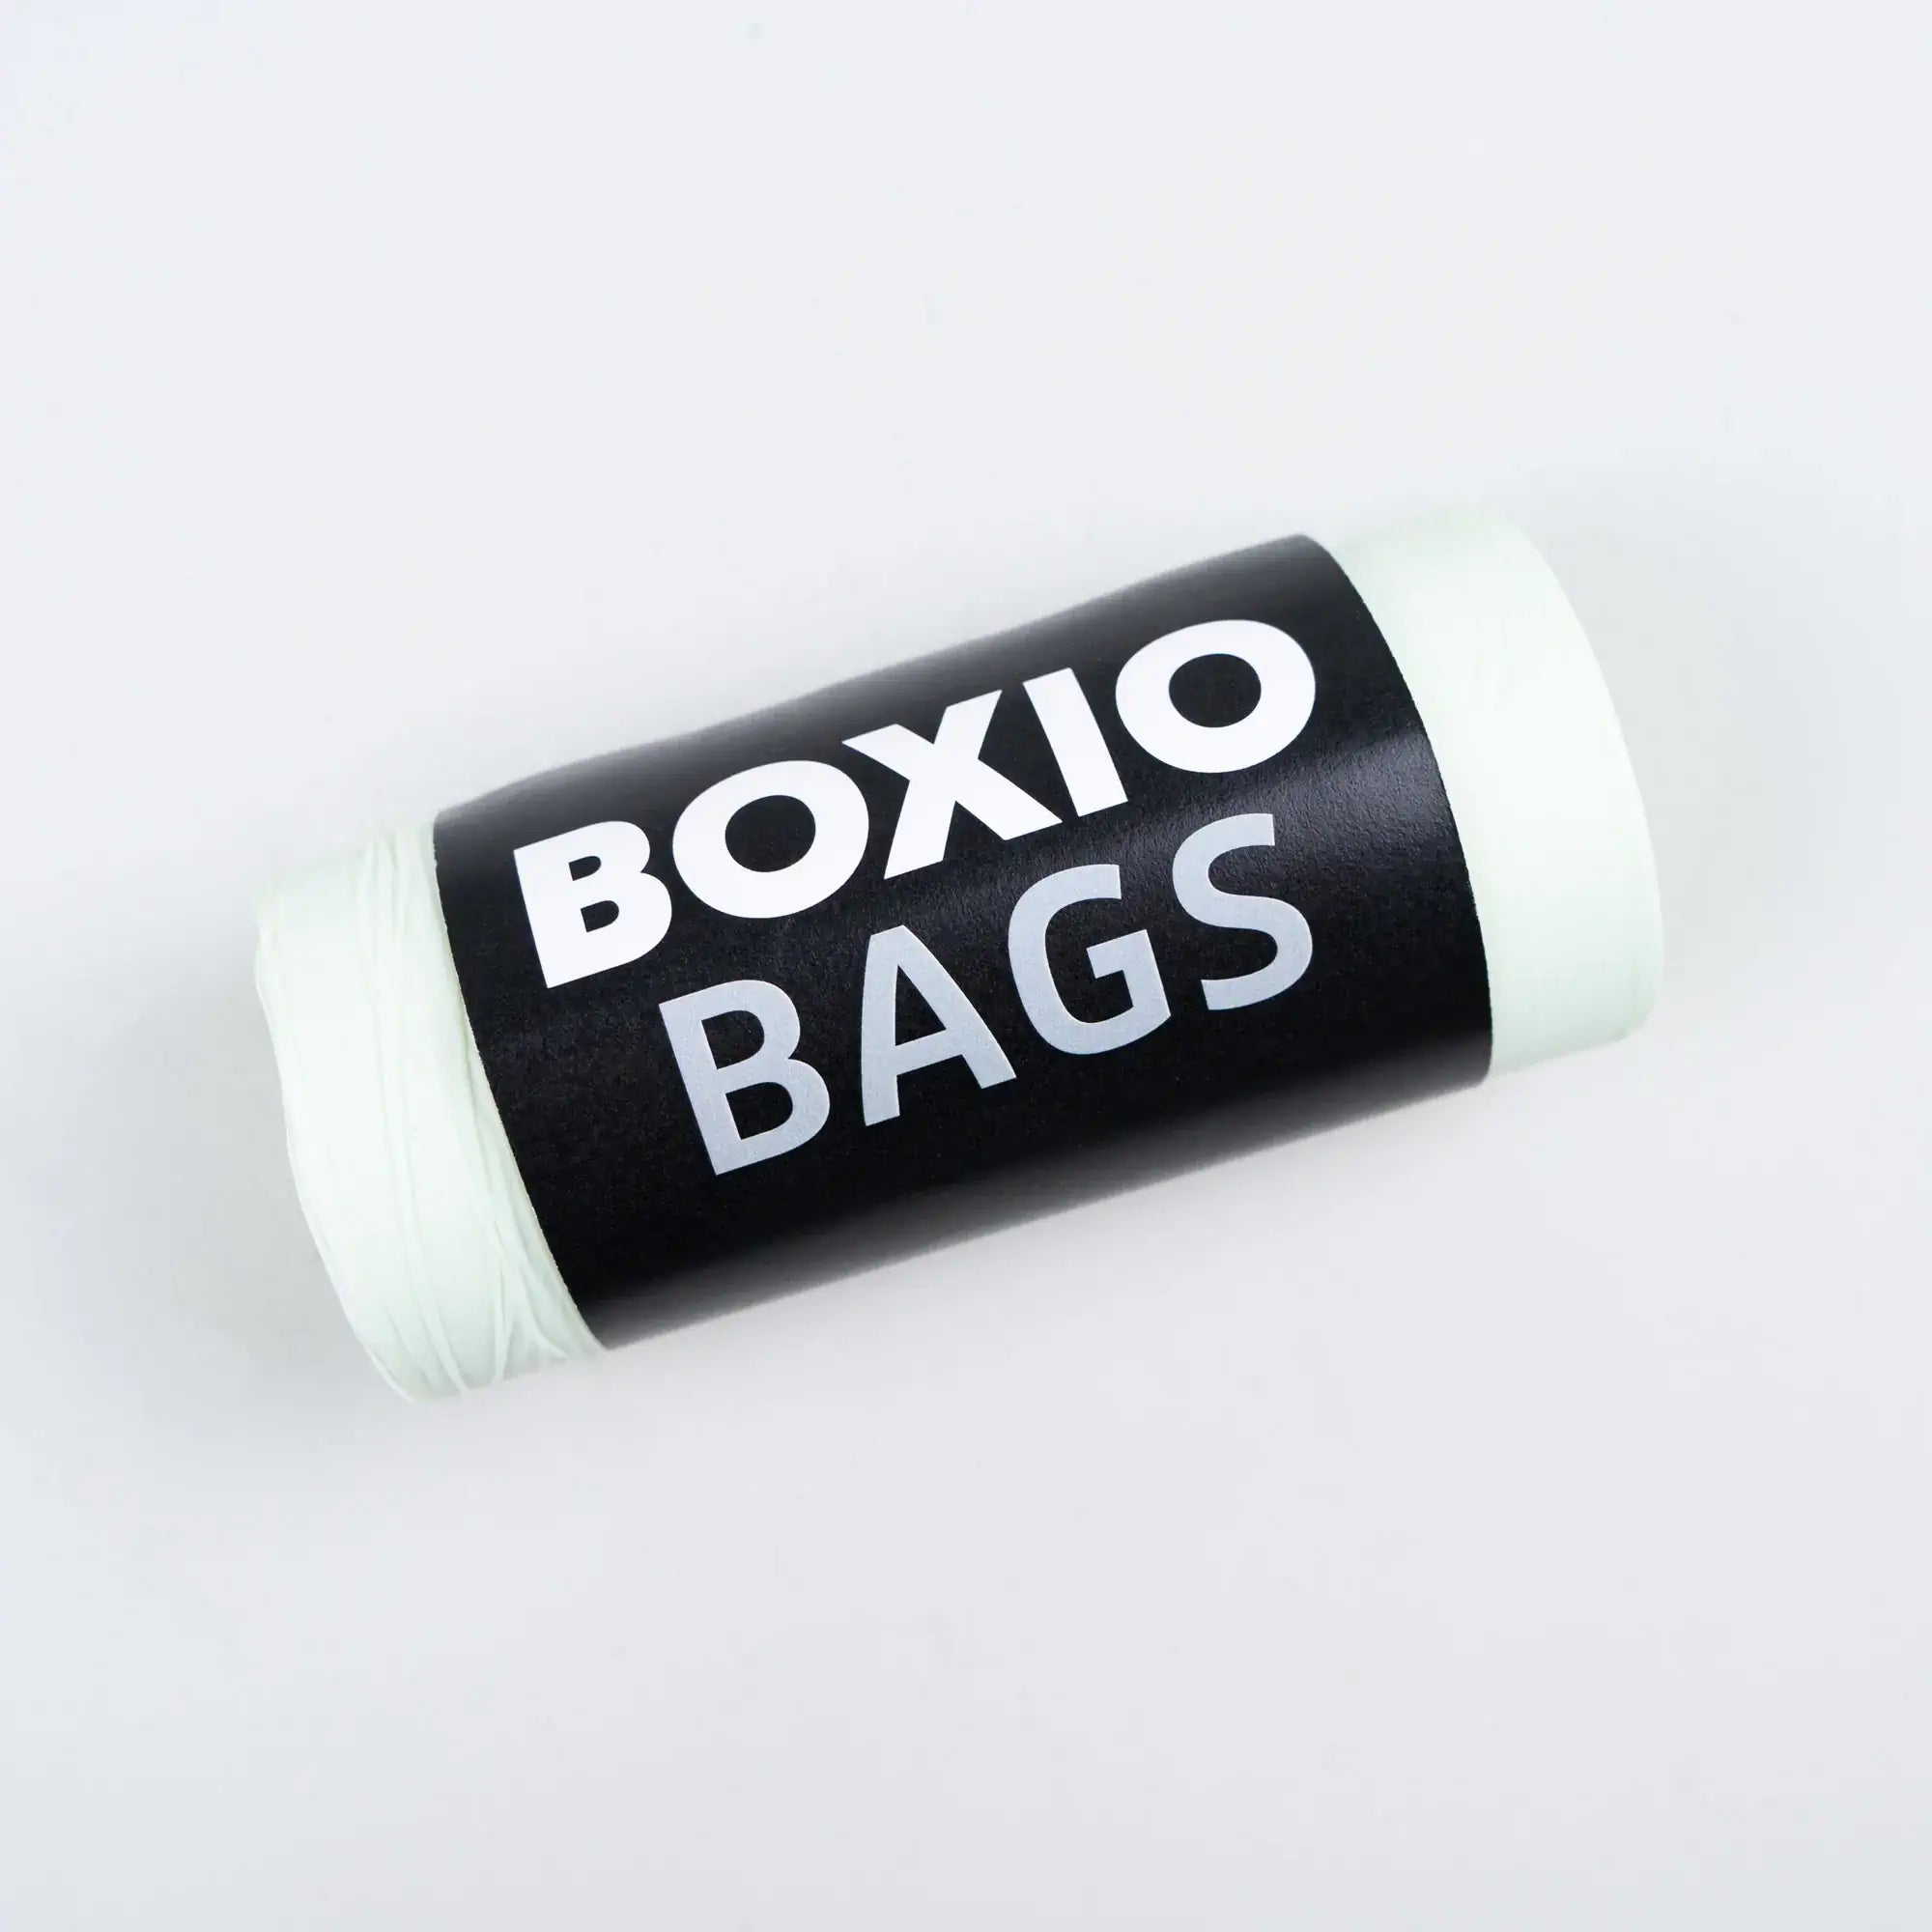 Boxio - BIO BAGS: 25 compostable bags